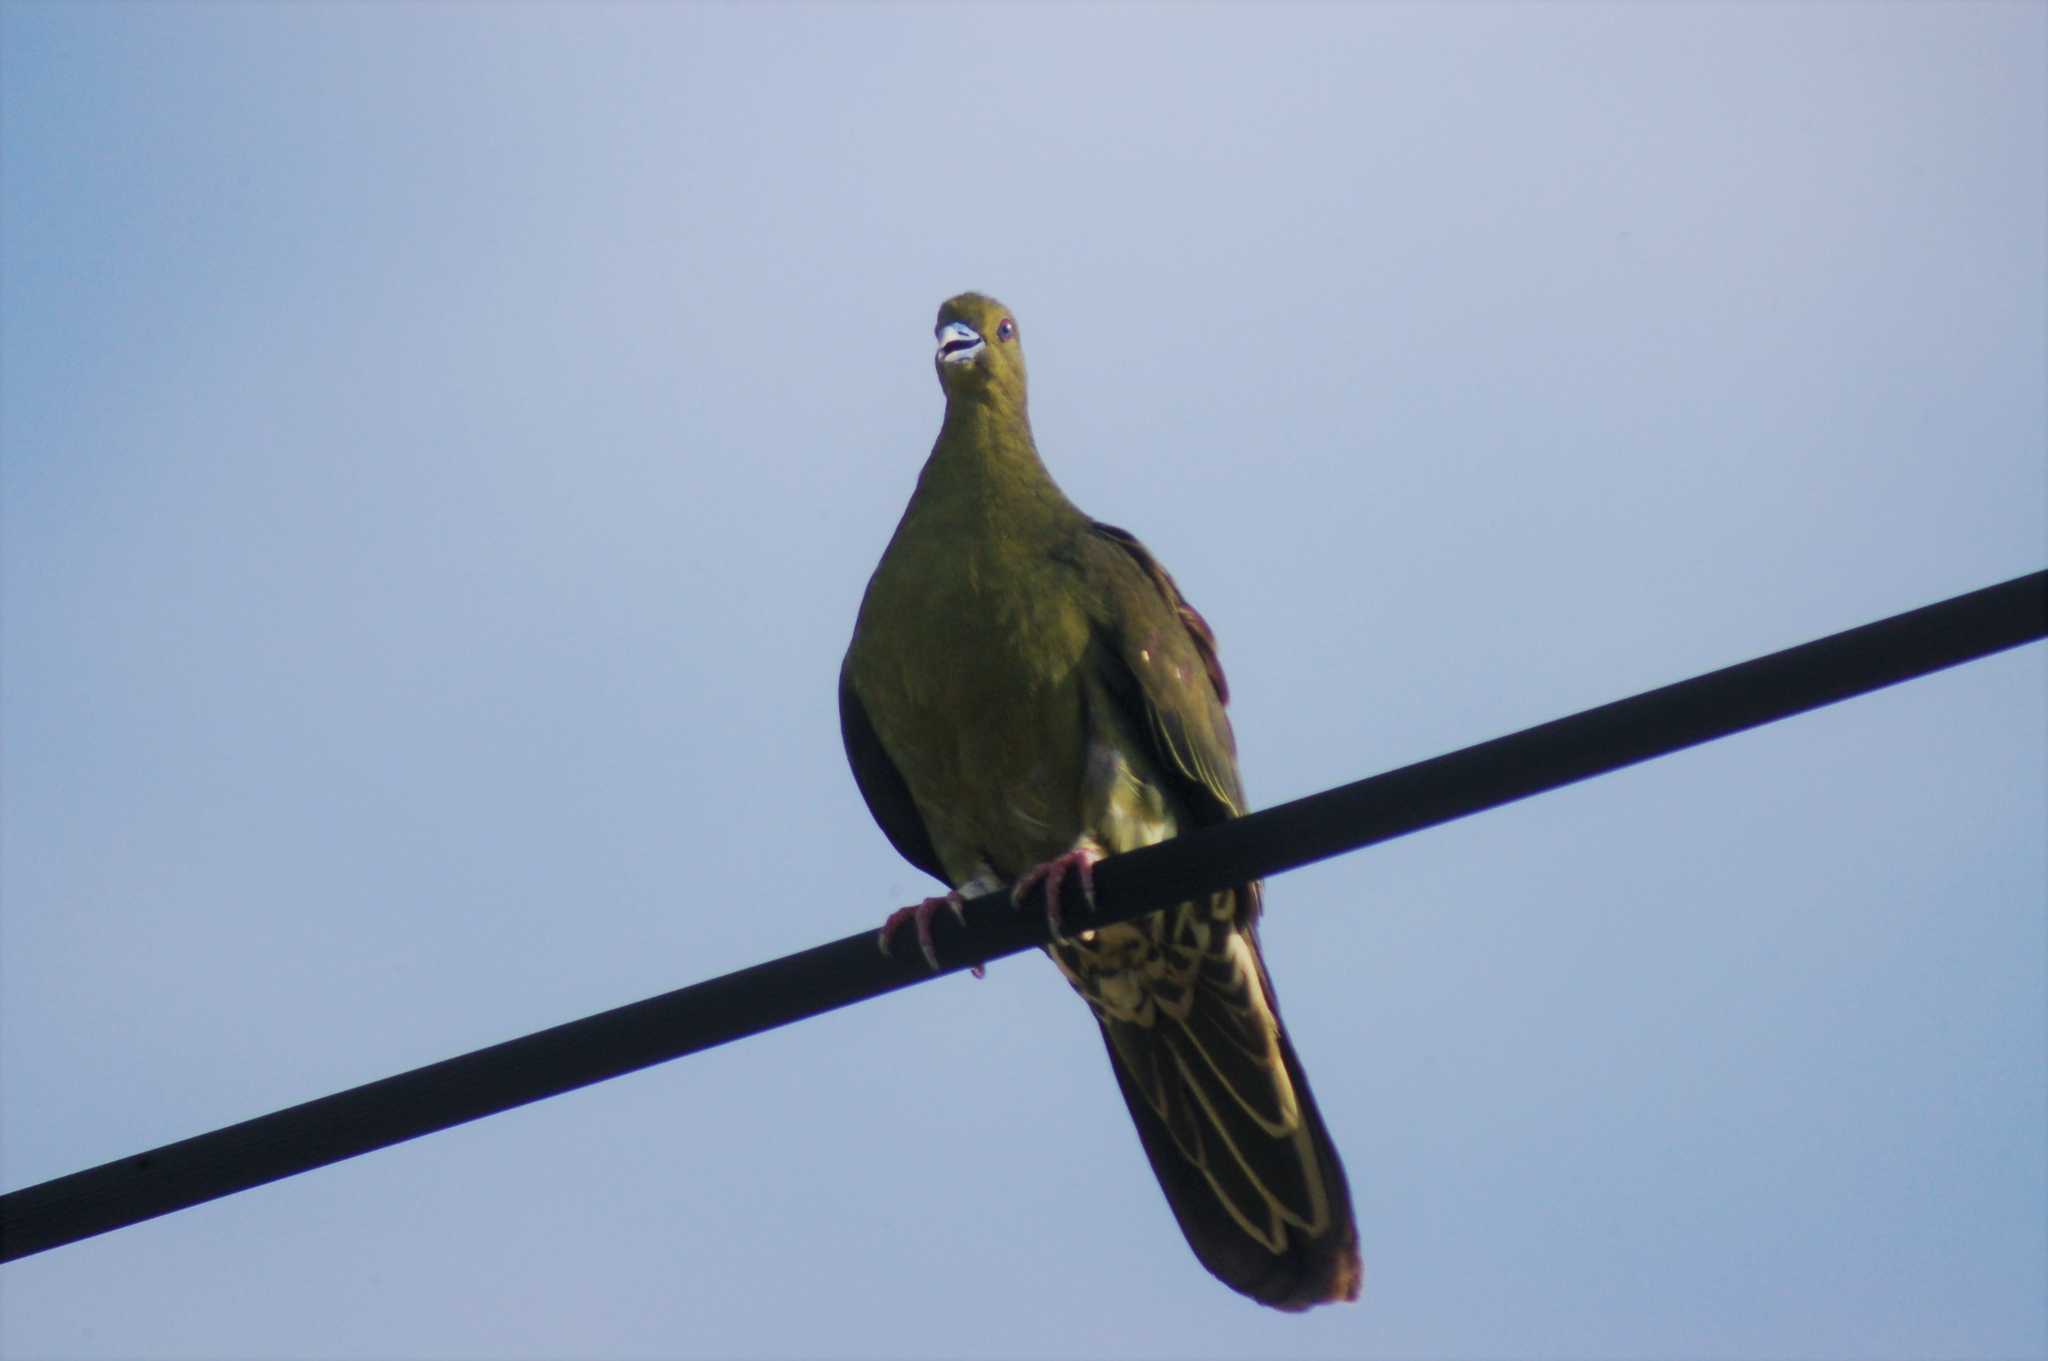 Photo of Ryukyu Green Pigeon at Ishigaki Island by Semal